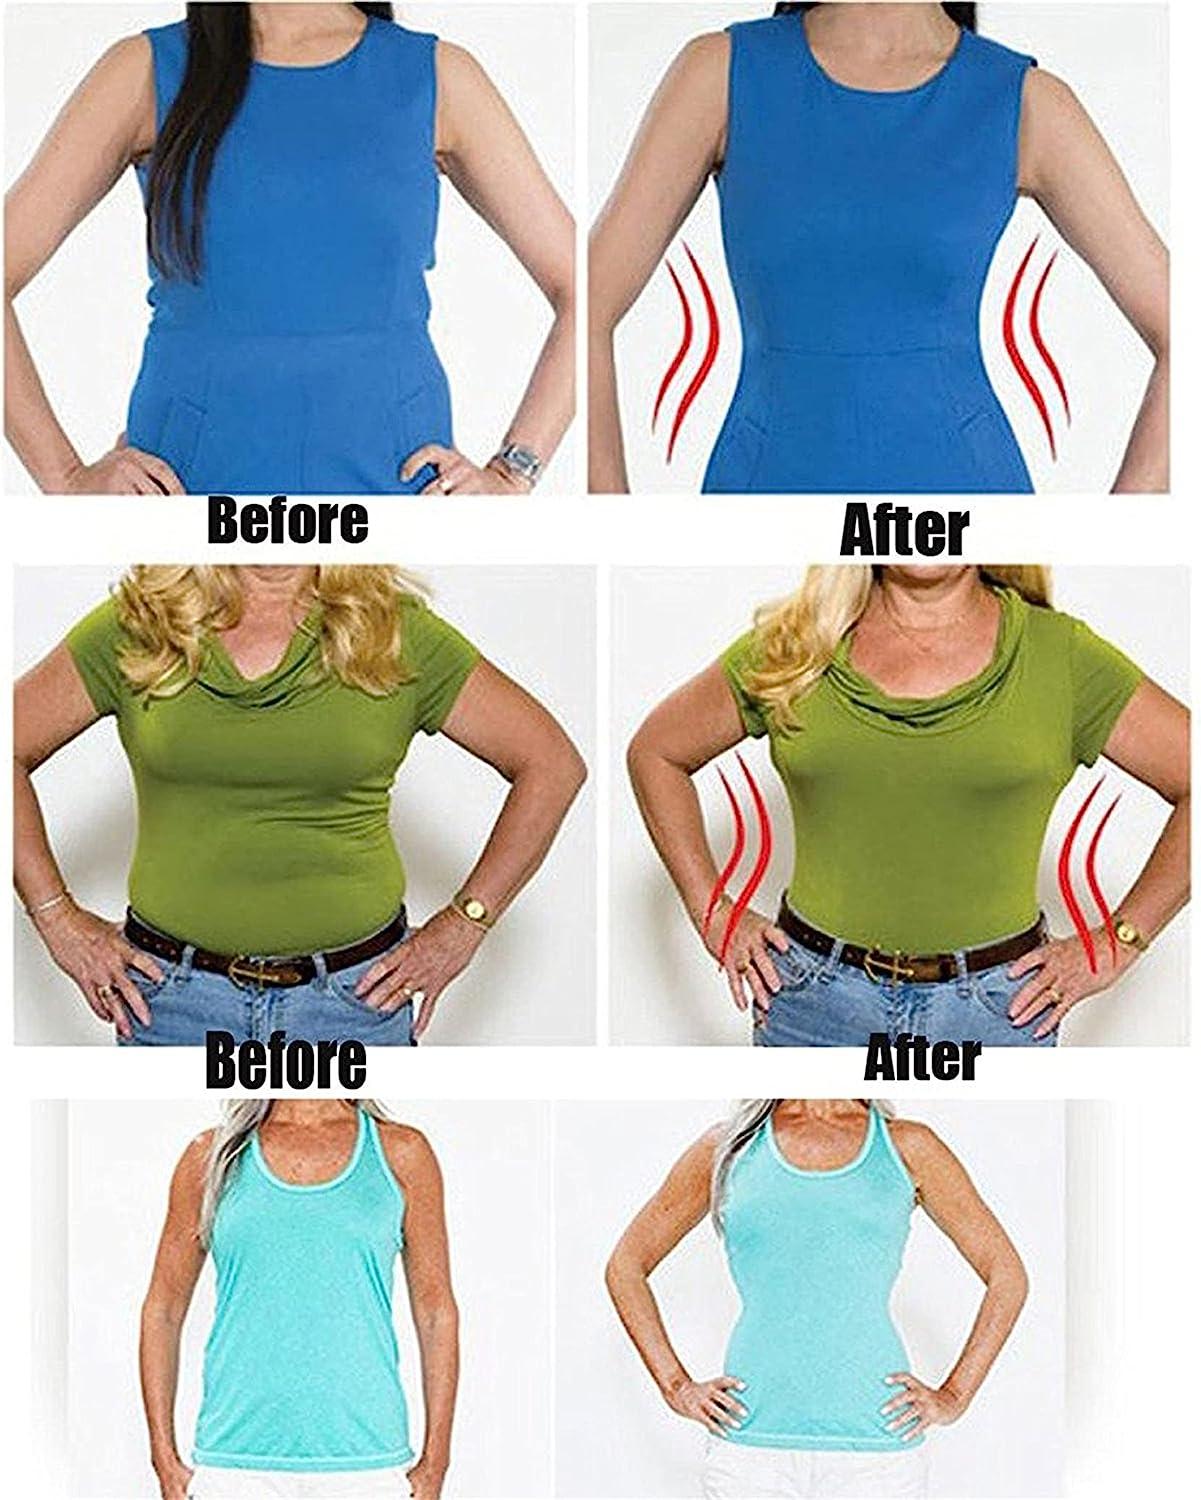 Waist Trainer Body Shaper Tummy Slimming Belt Woman Slimming Sweat Fat  Burning Belt Control Belly Hourglass Girdle Shapewear